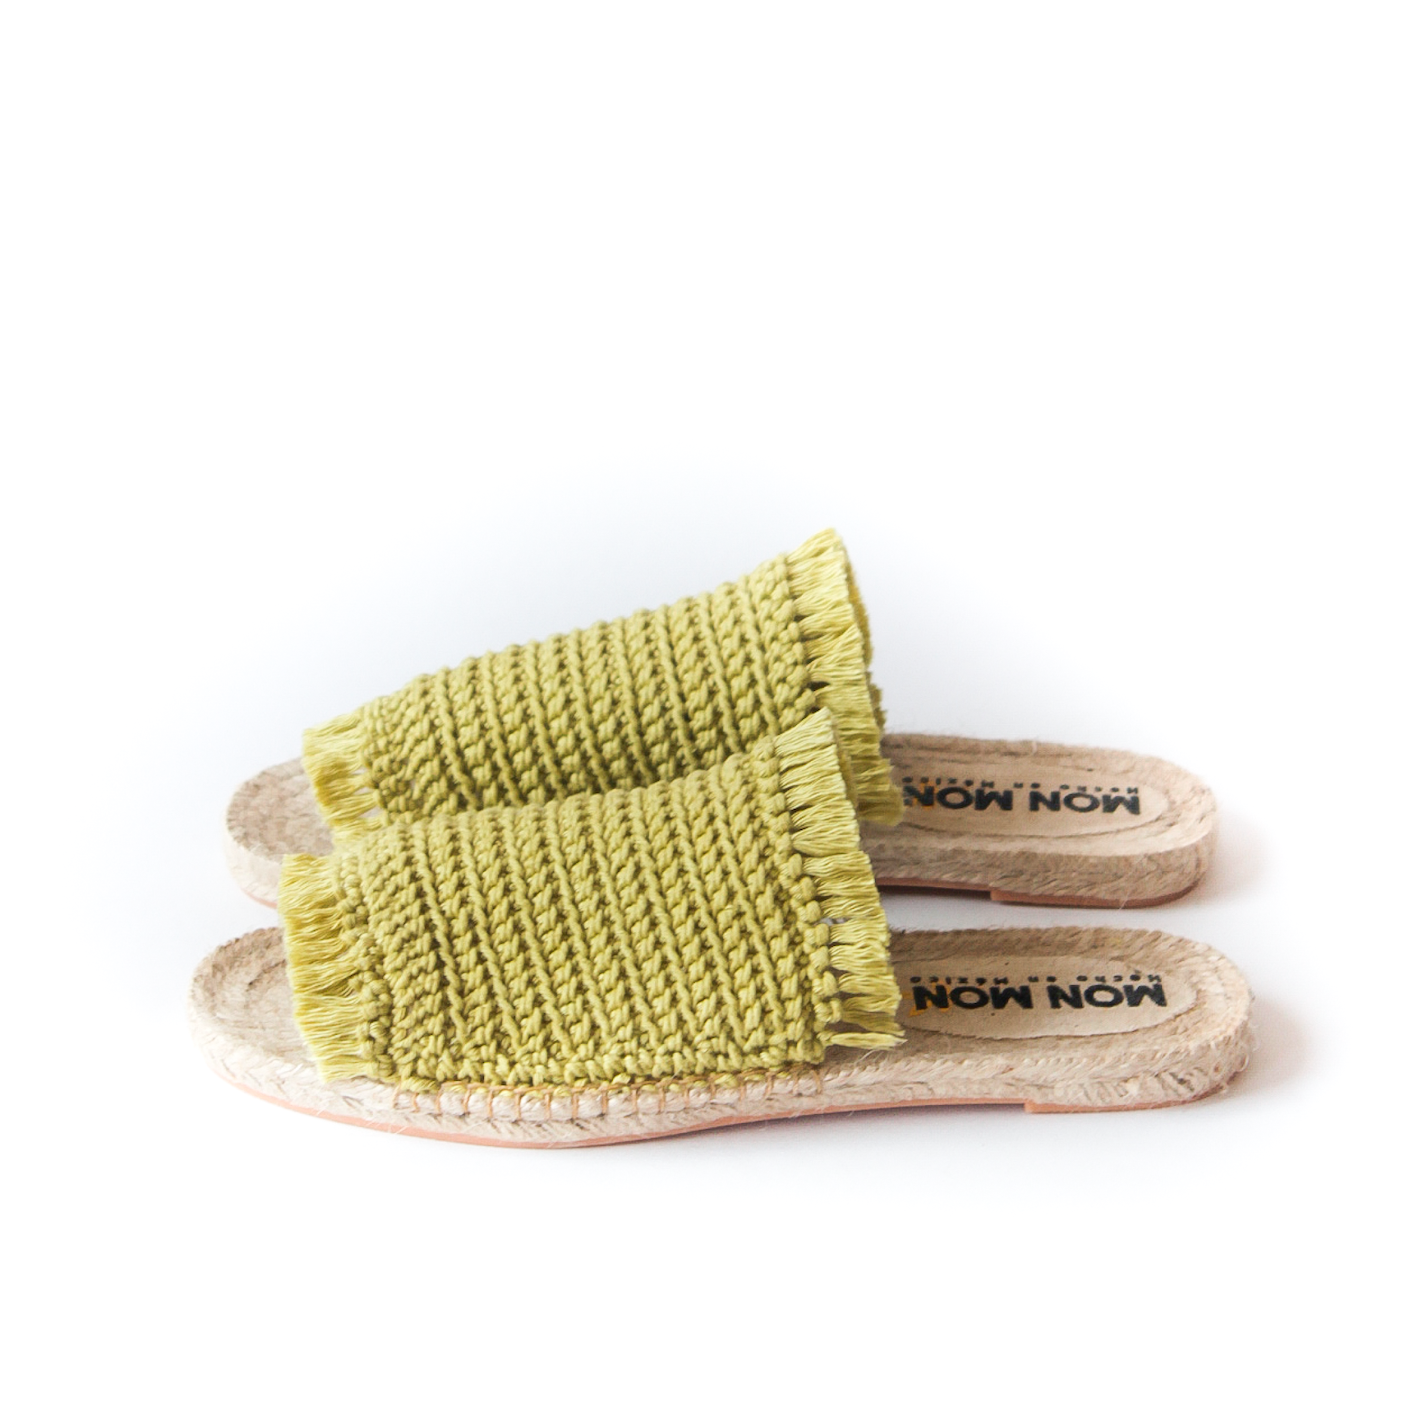 Sandalia Crochet Aceituna